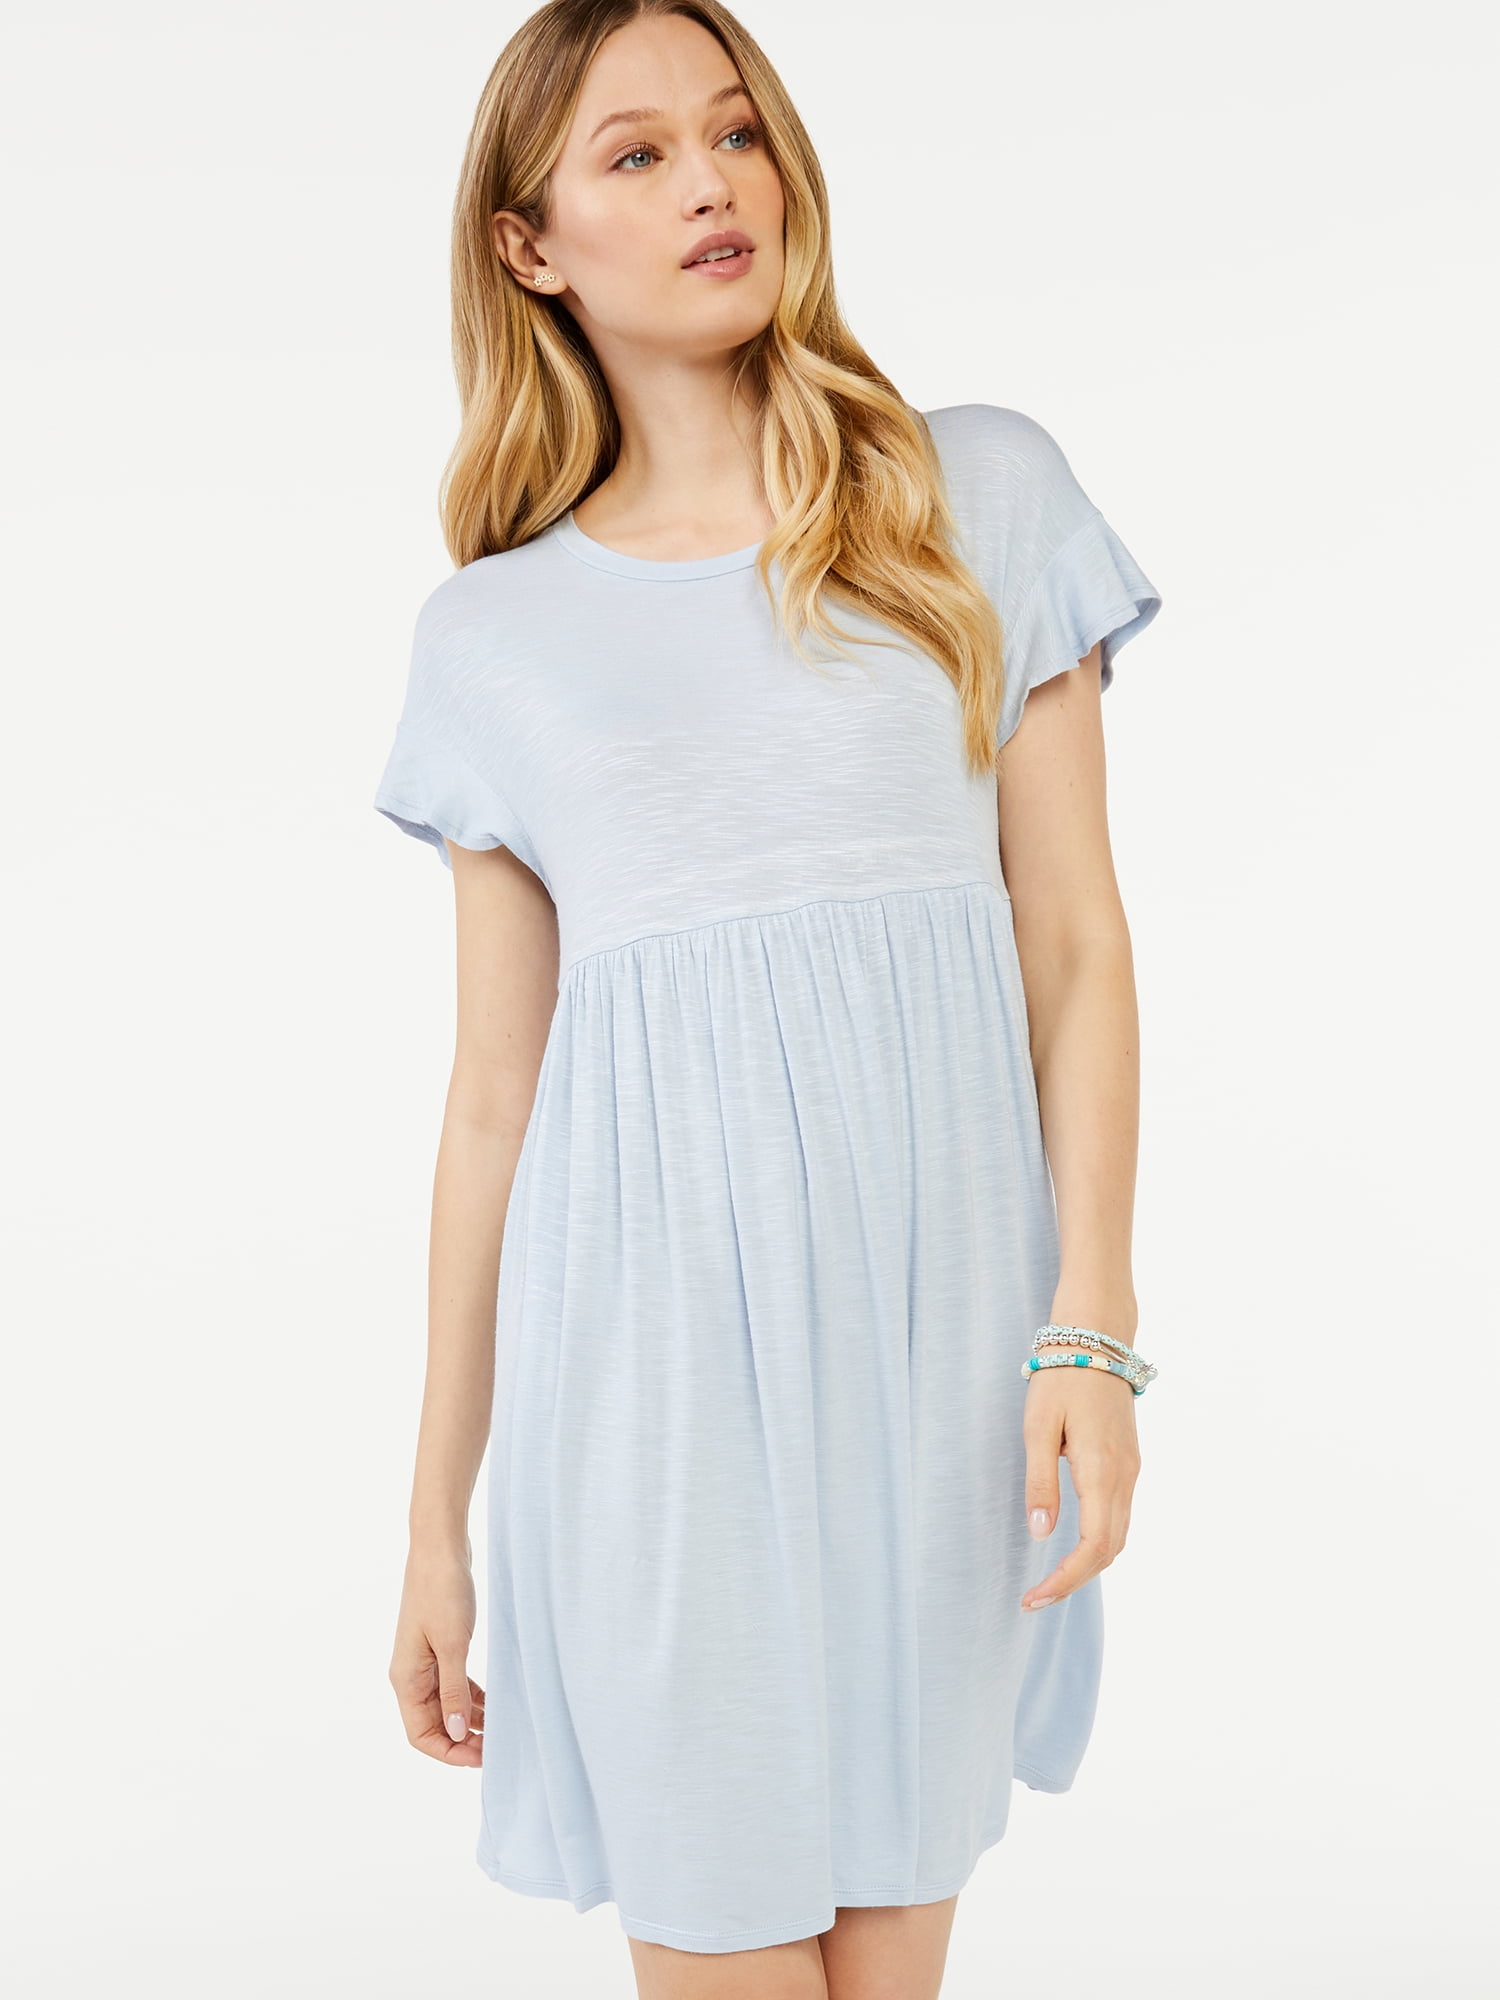 Scoop Women's Flutter Sleeve Dress - Walmart.com